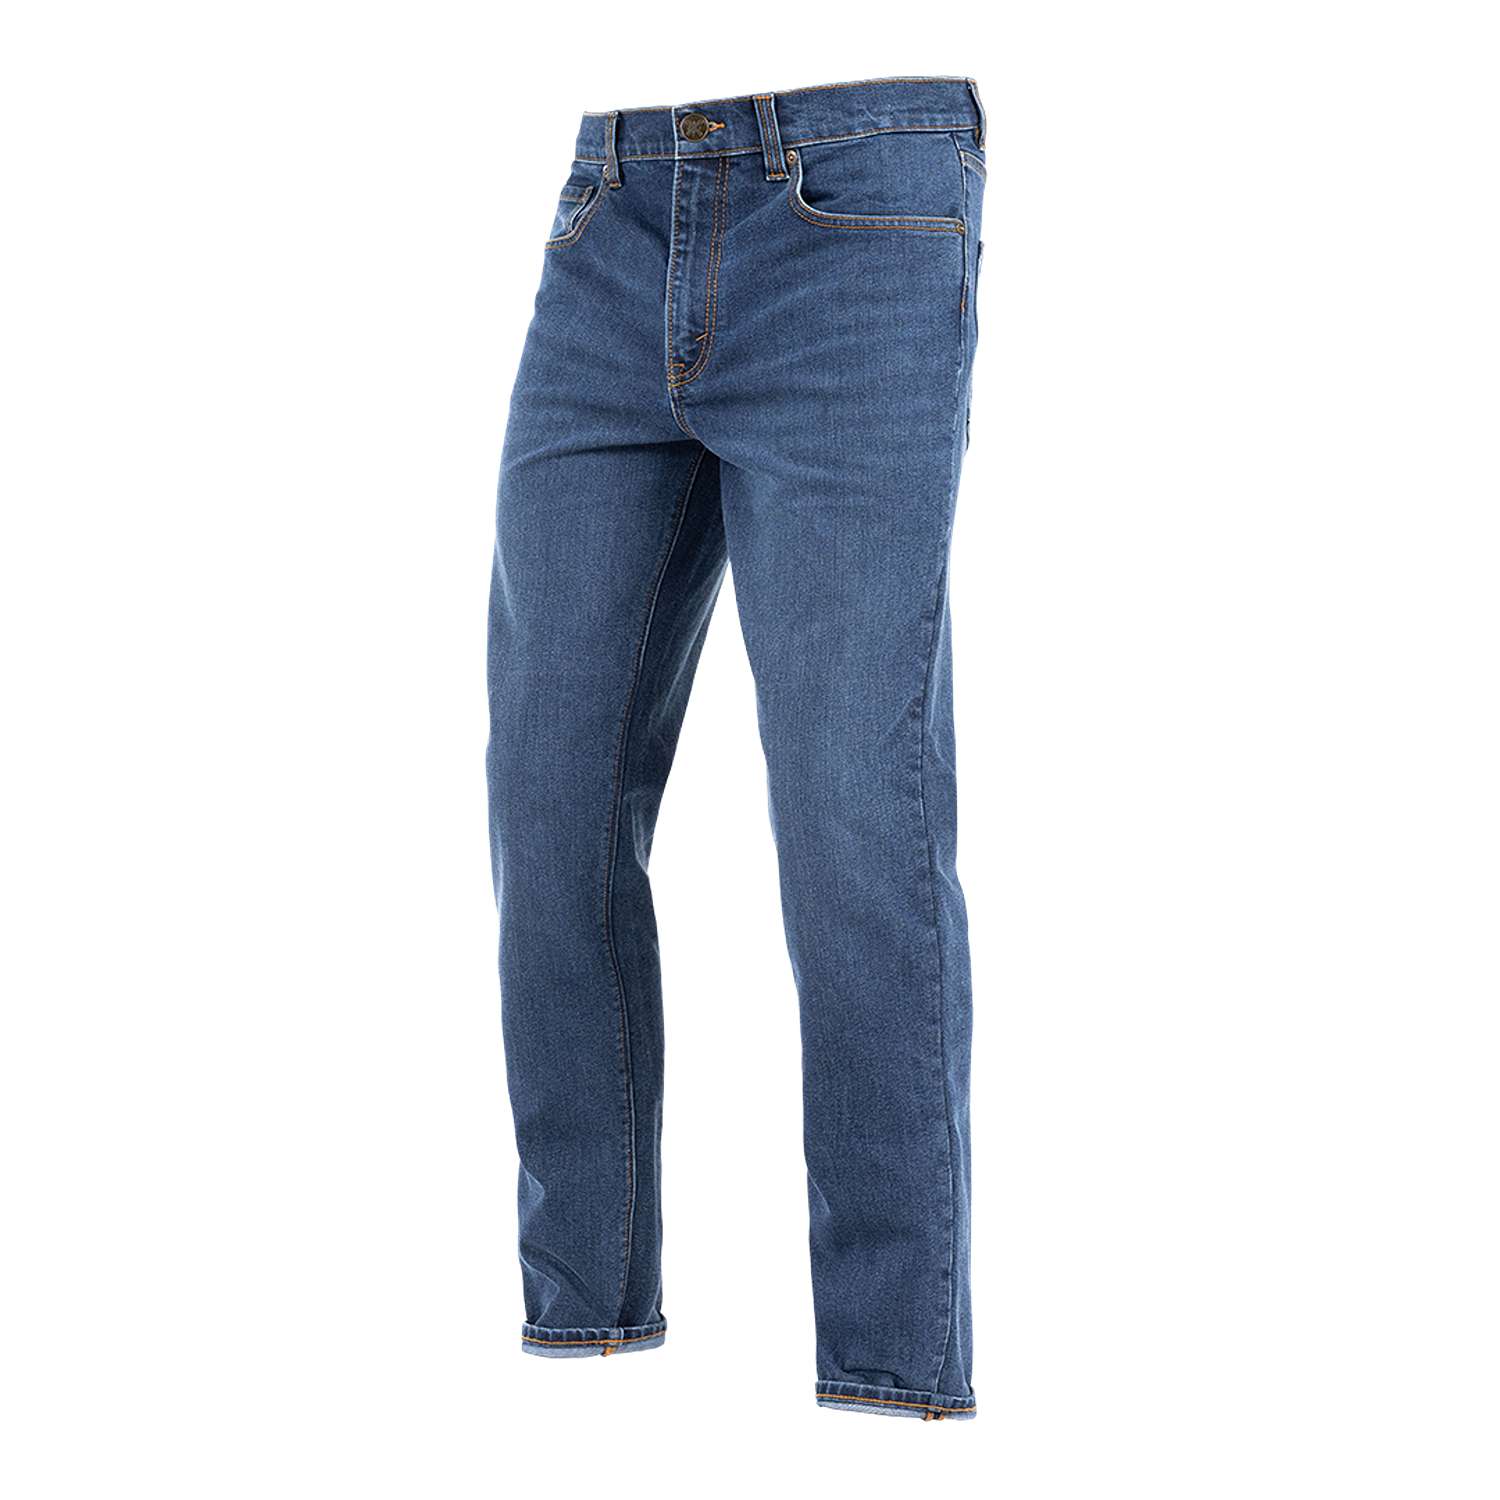 Image of John Doe Classic Tapered Jeans Indigo Size W33/L32 EN